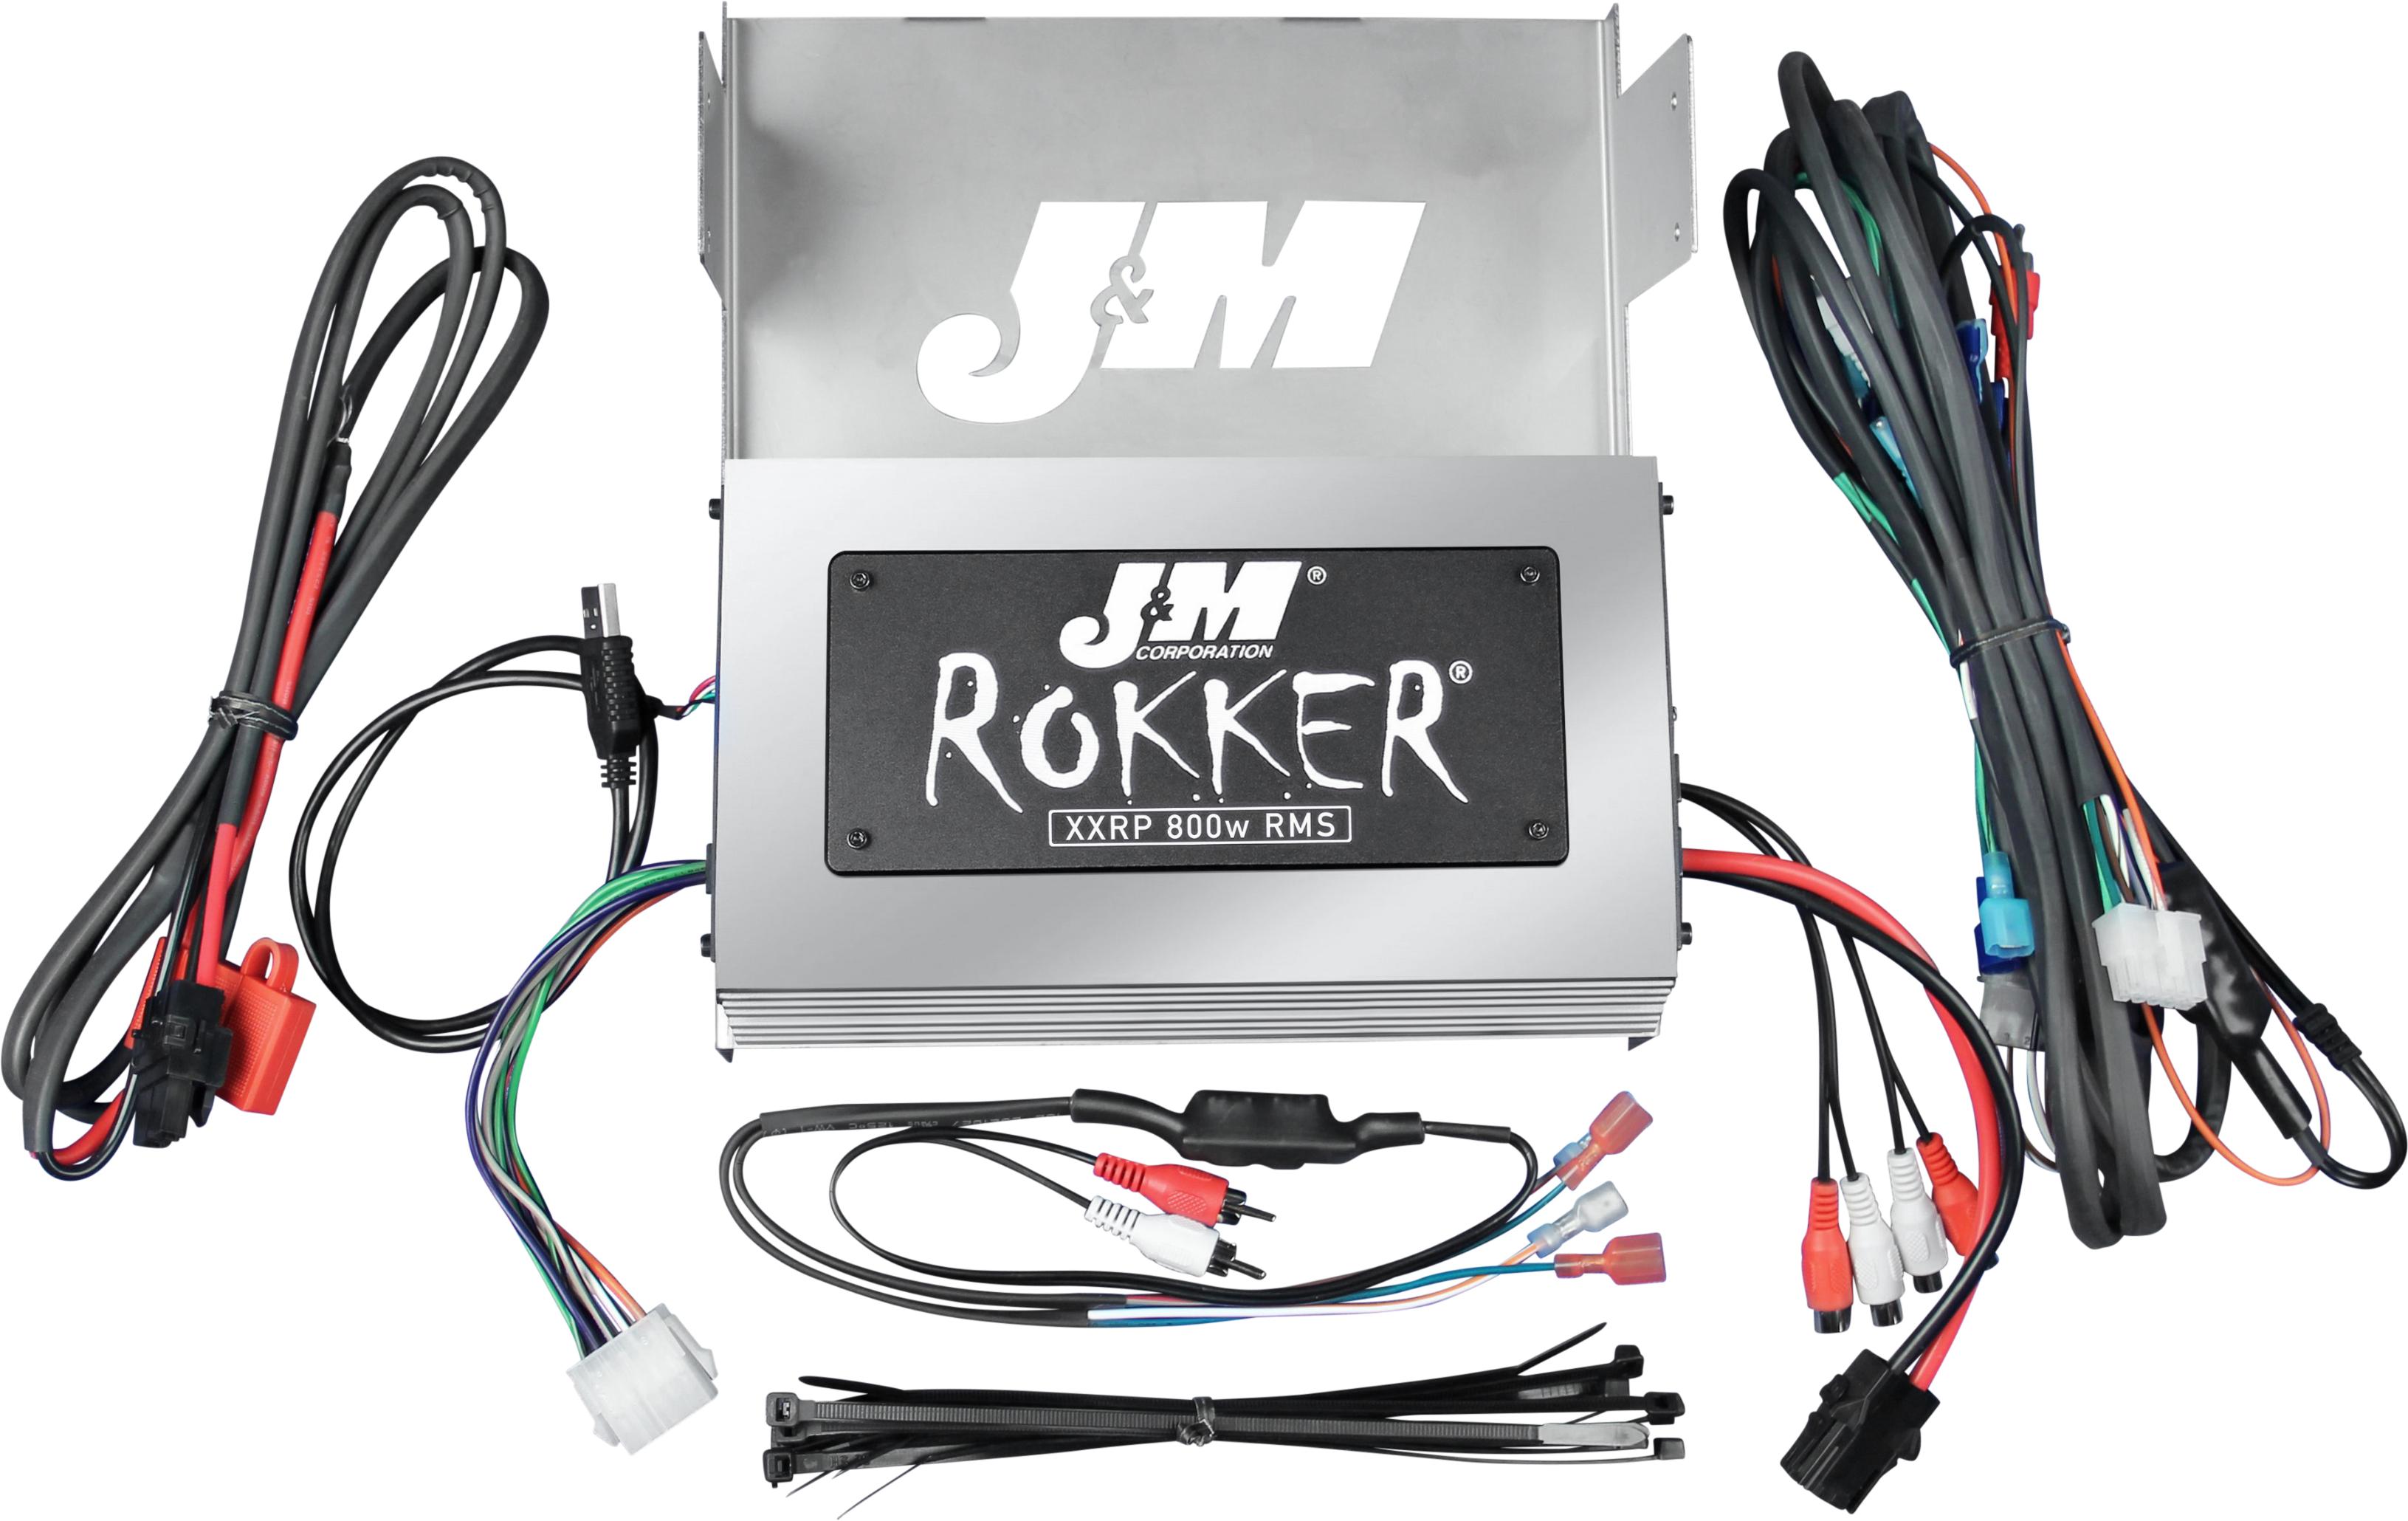 J&m - Rokker P800w 4-ch Amp Kit 06-13 Flhtcu - JAMP-800HC06-ULP